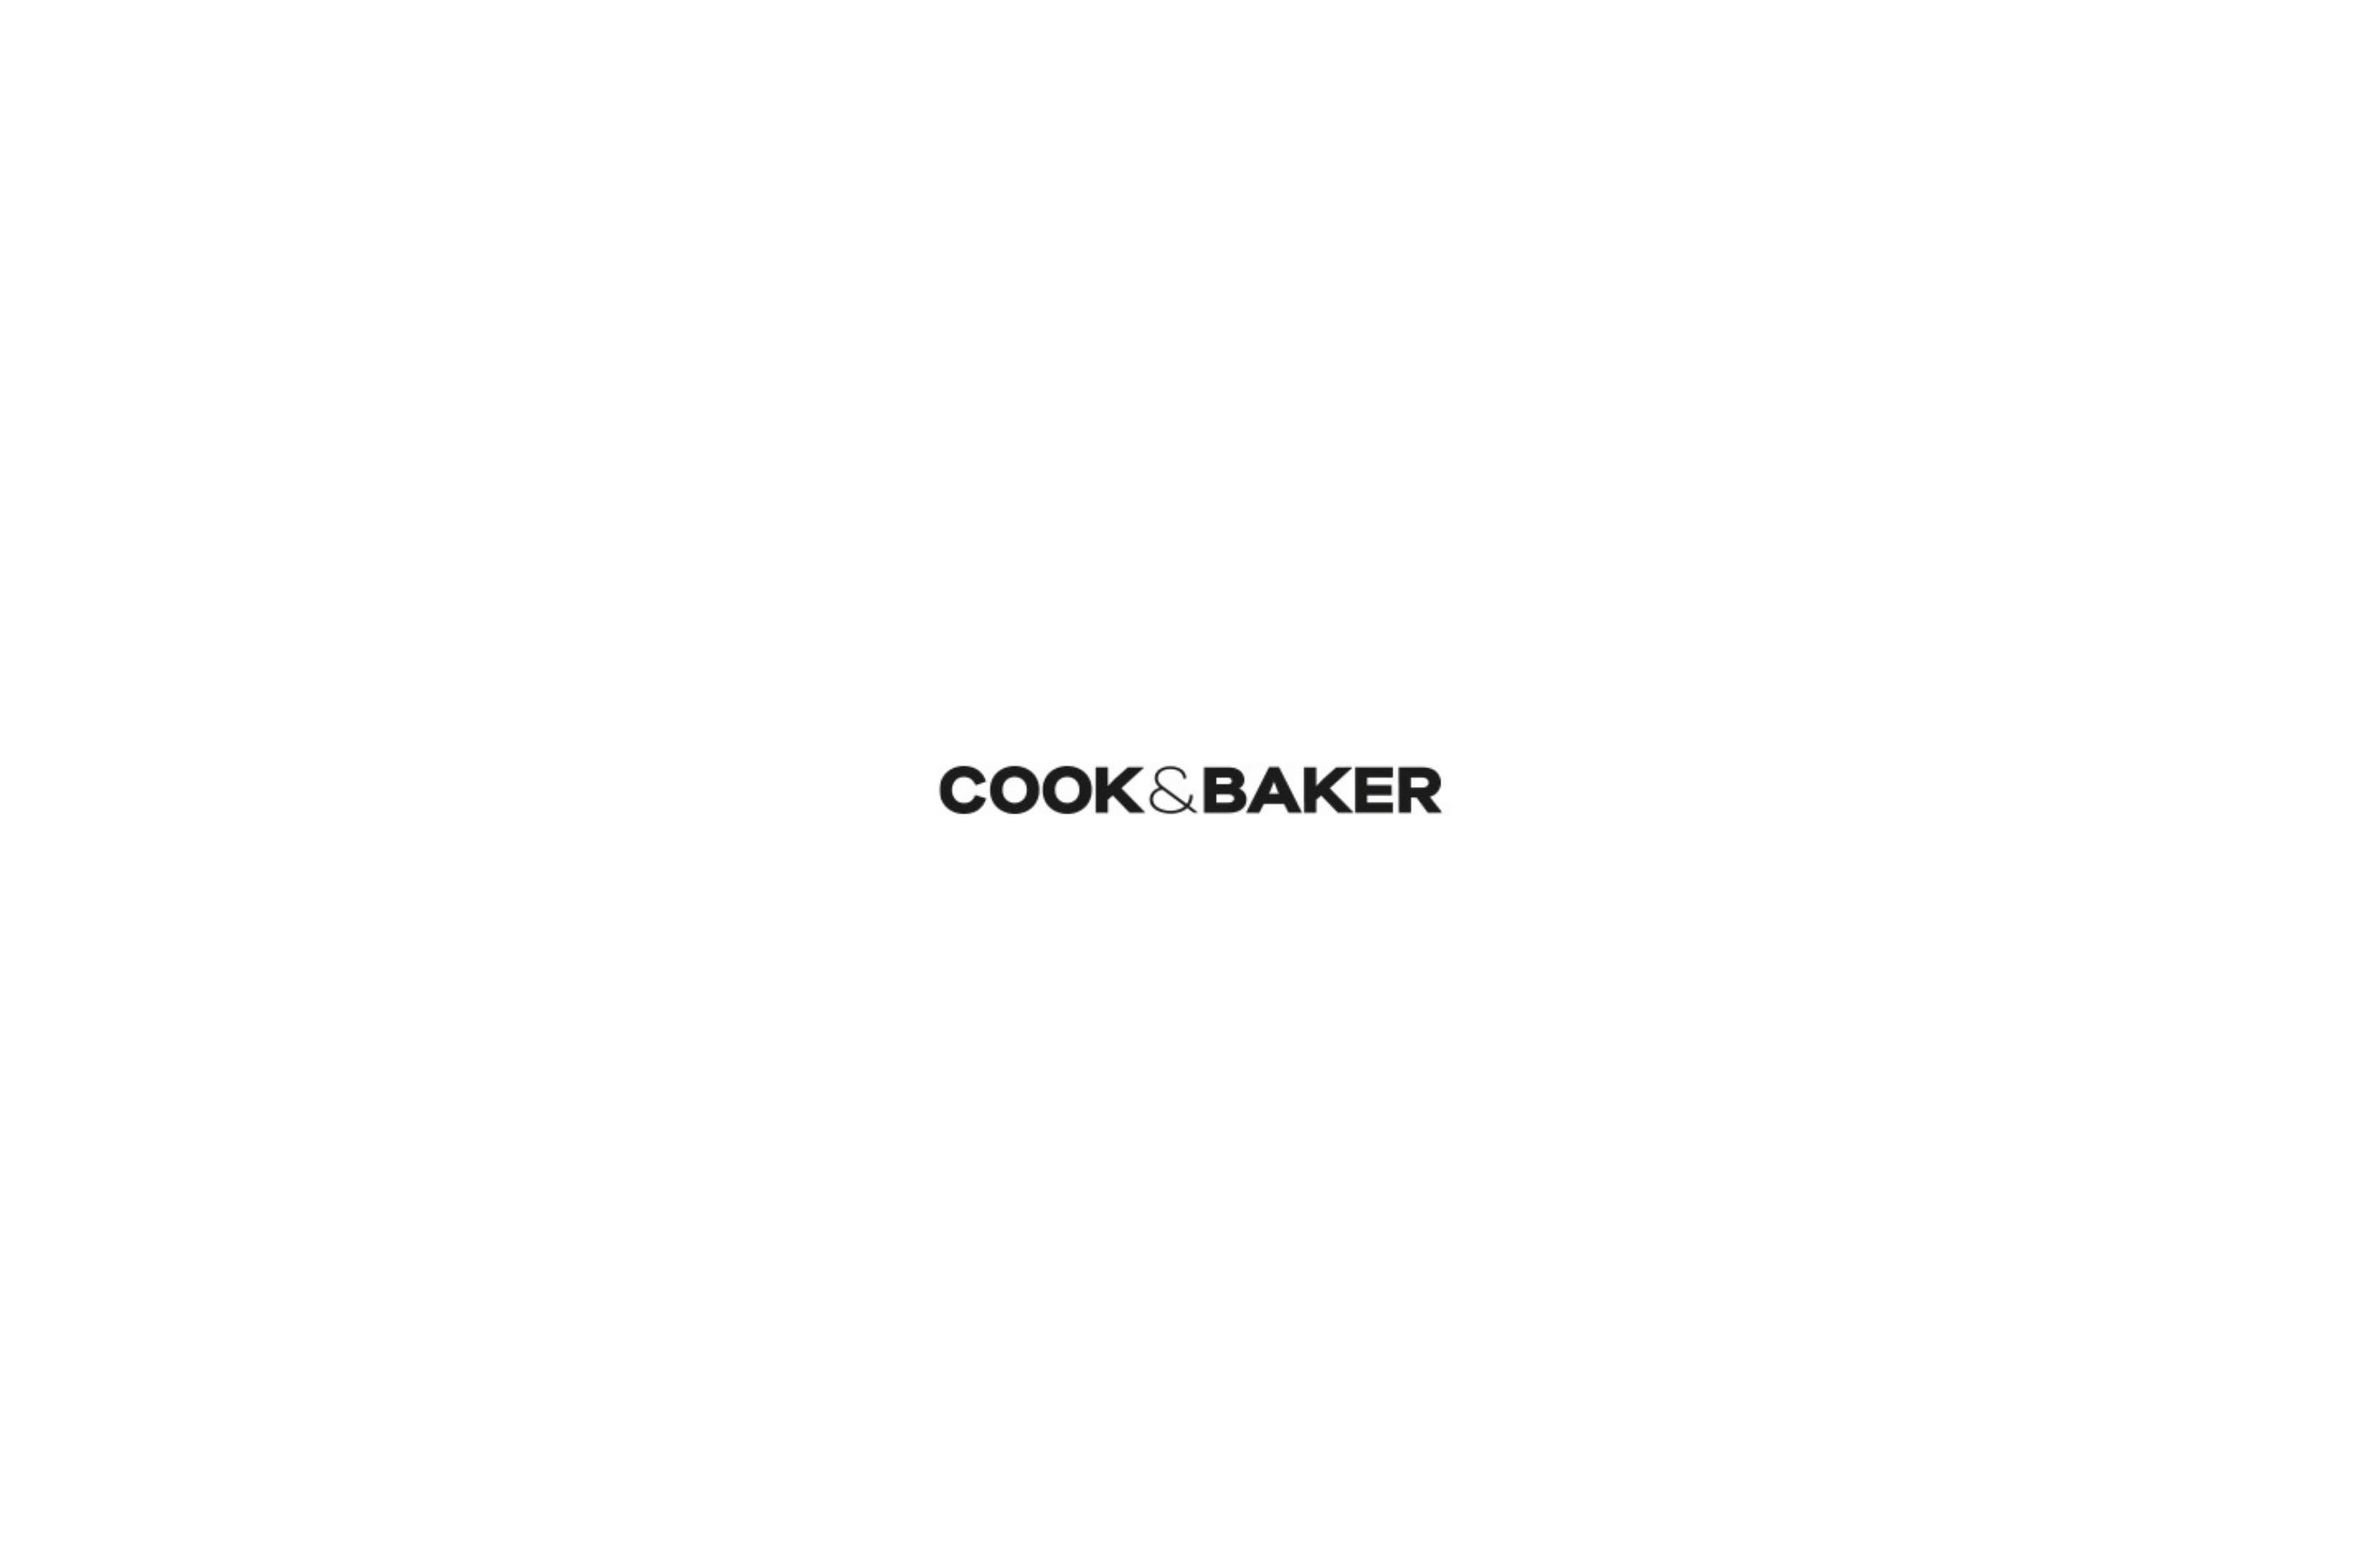 Cook & Baker logo